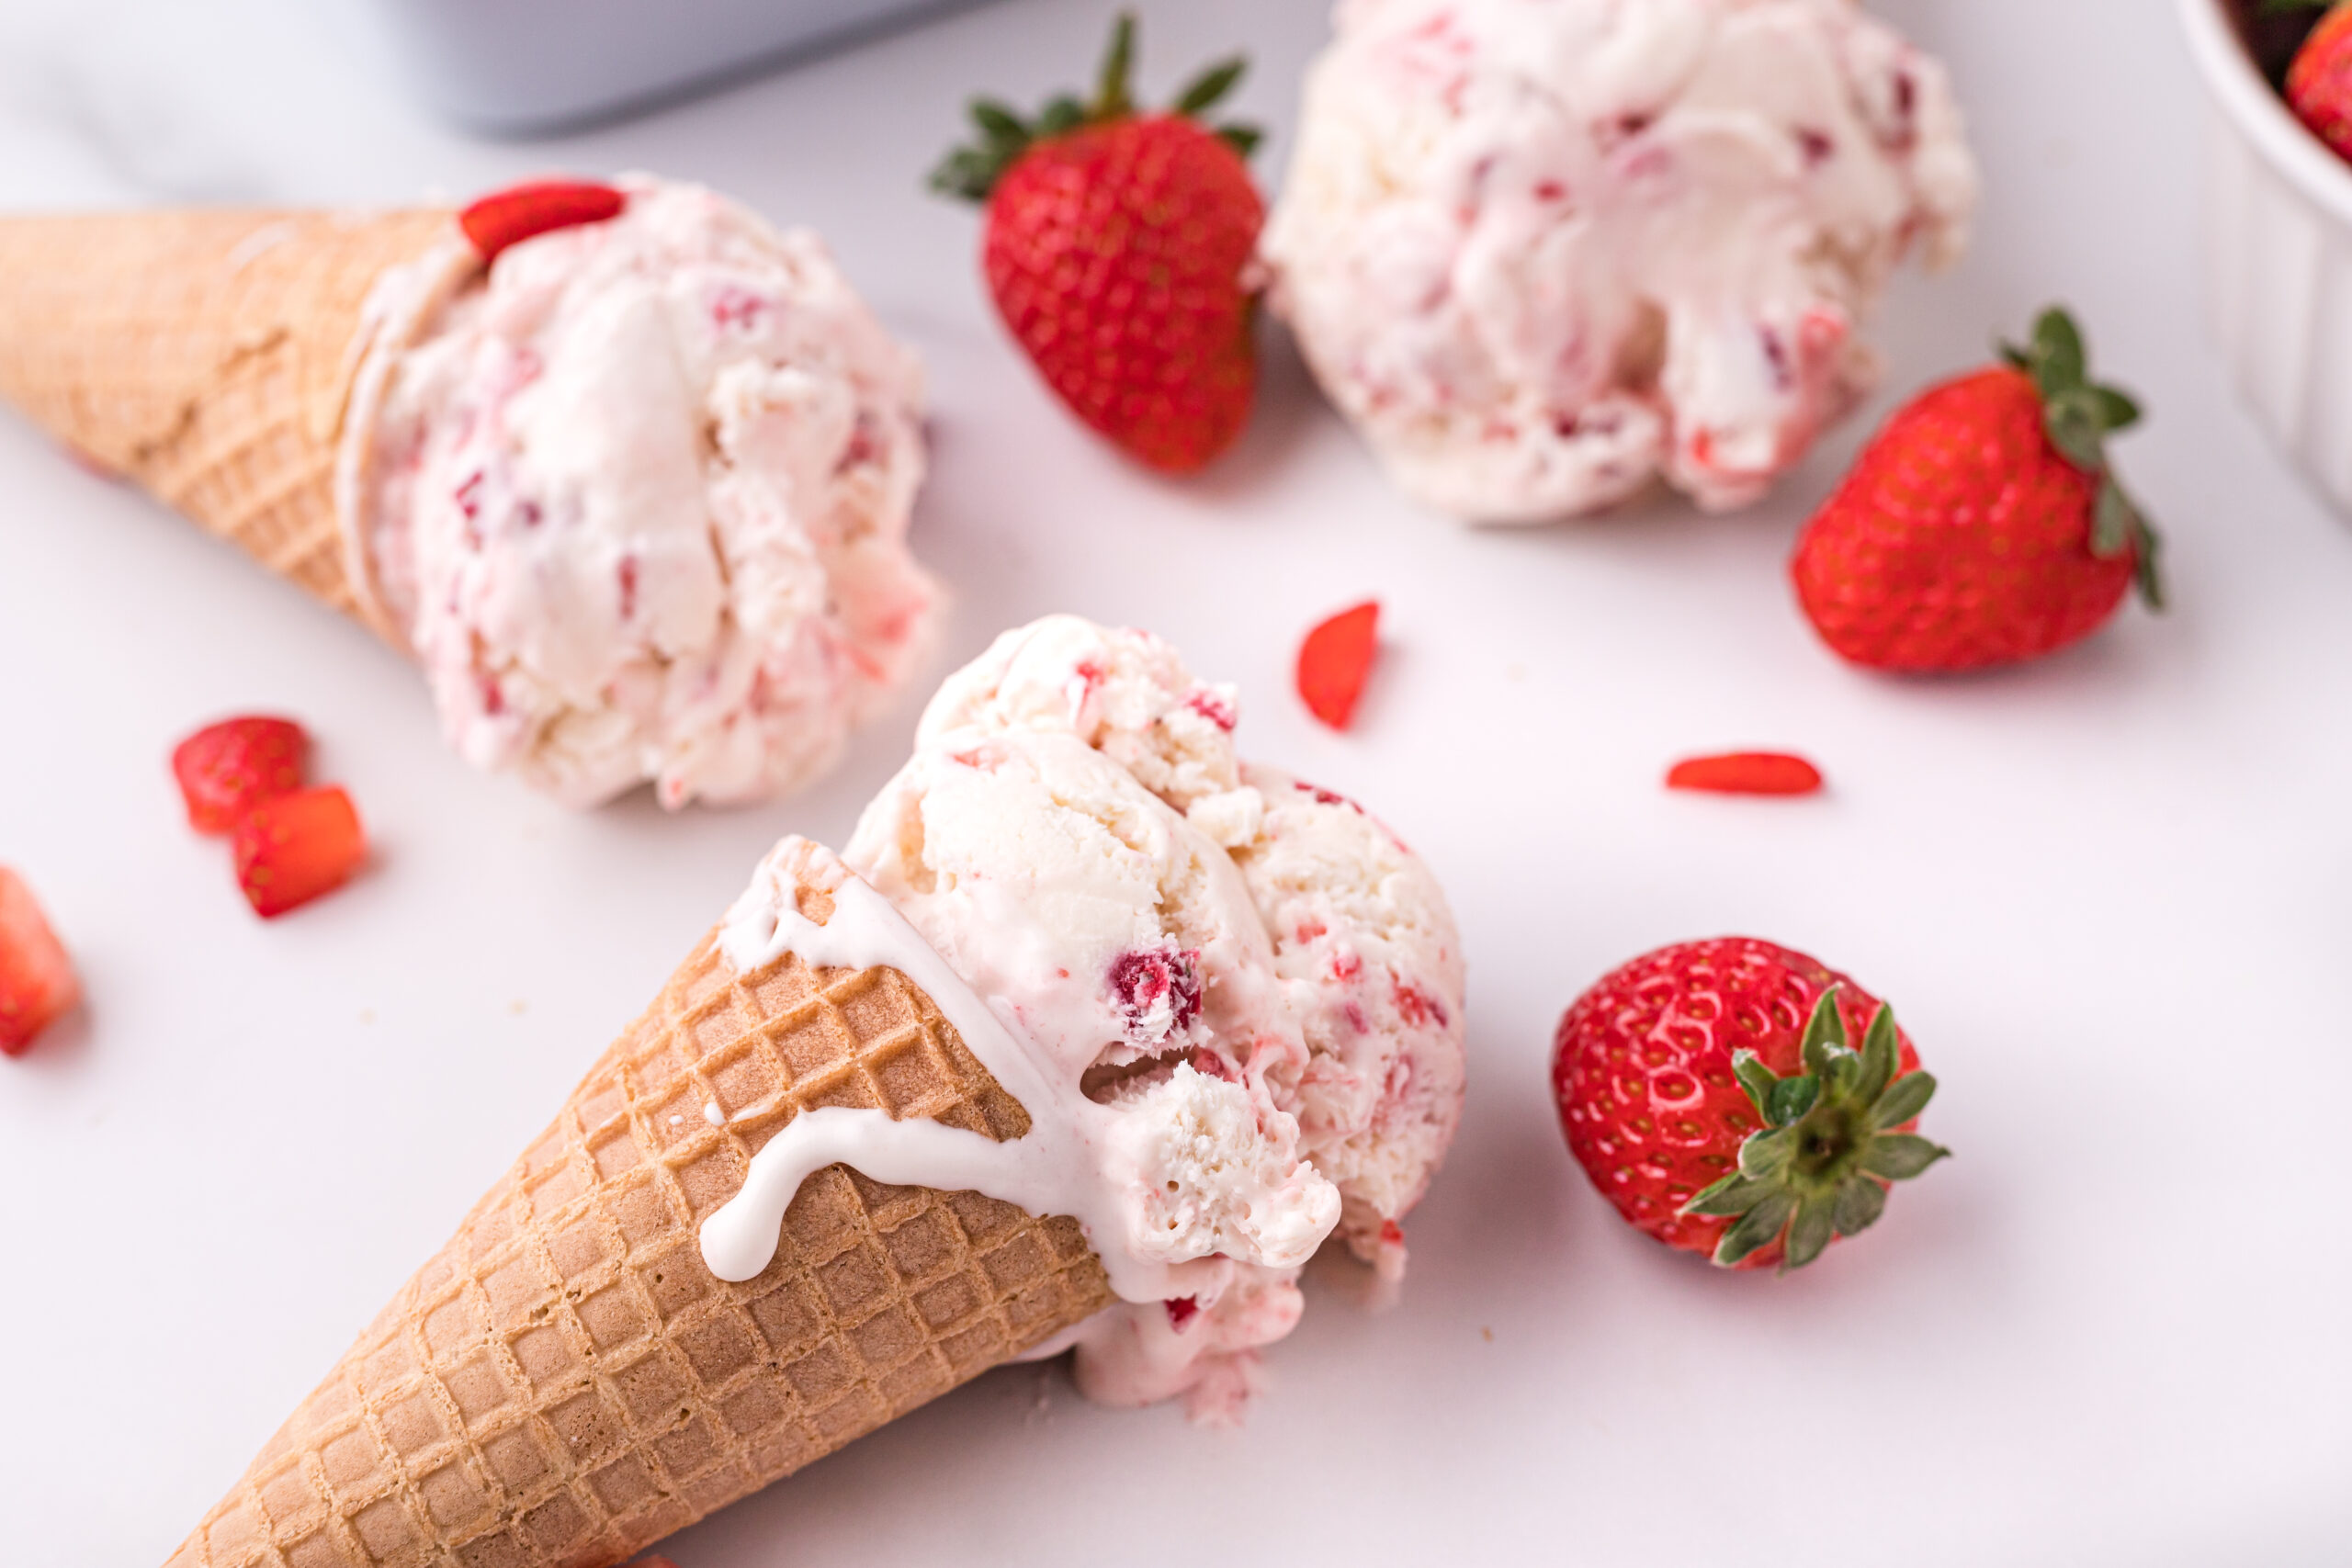 no churn strawberry ice cream recipe